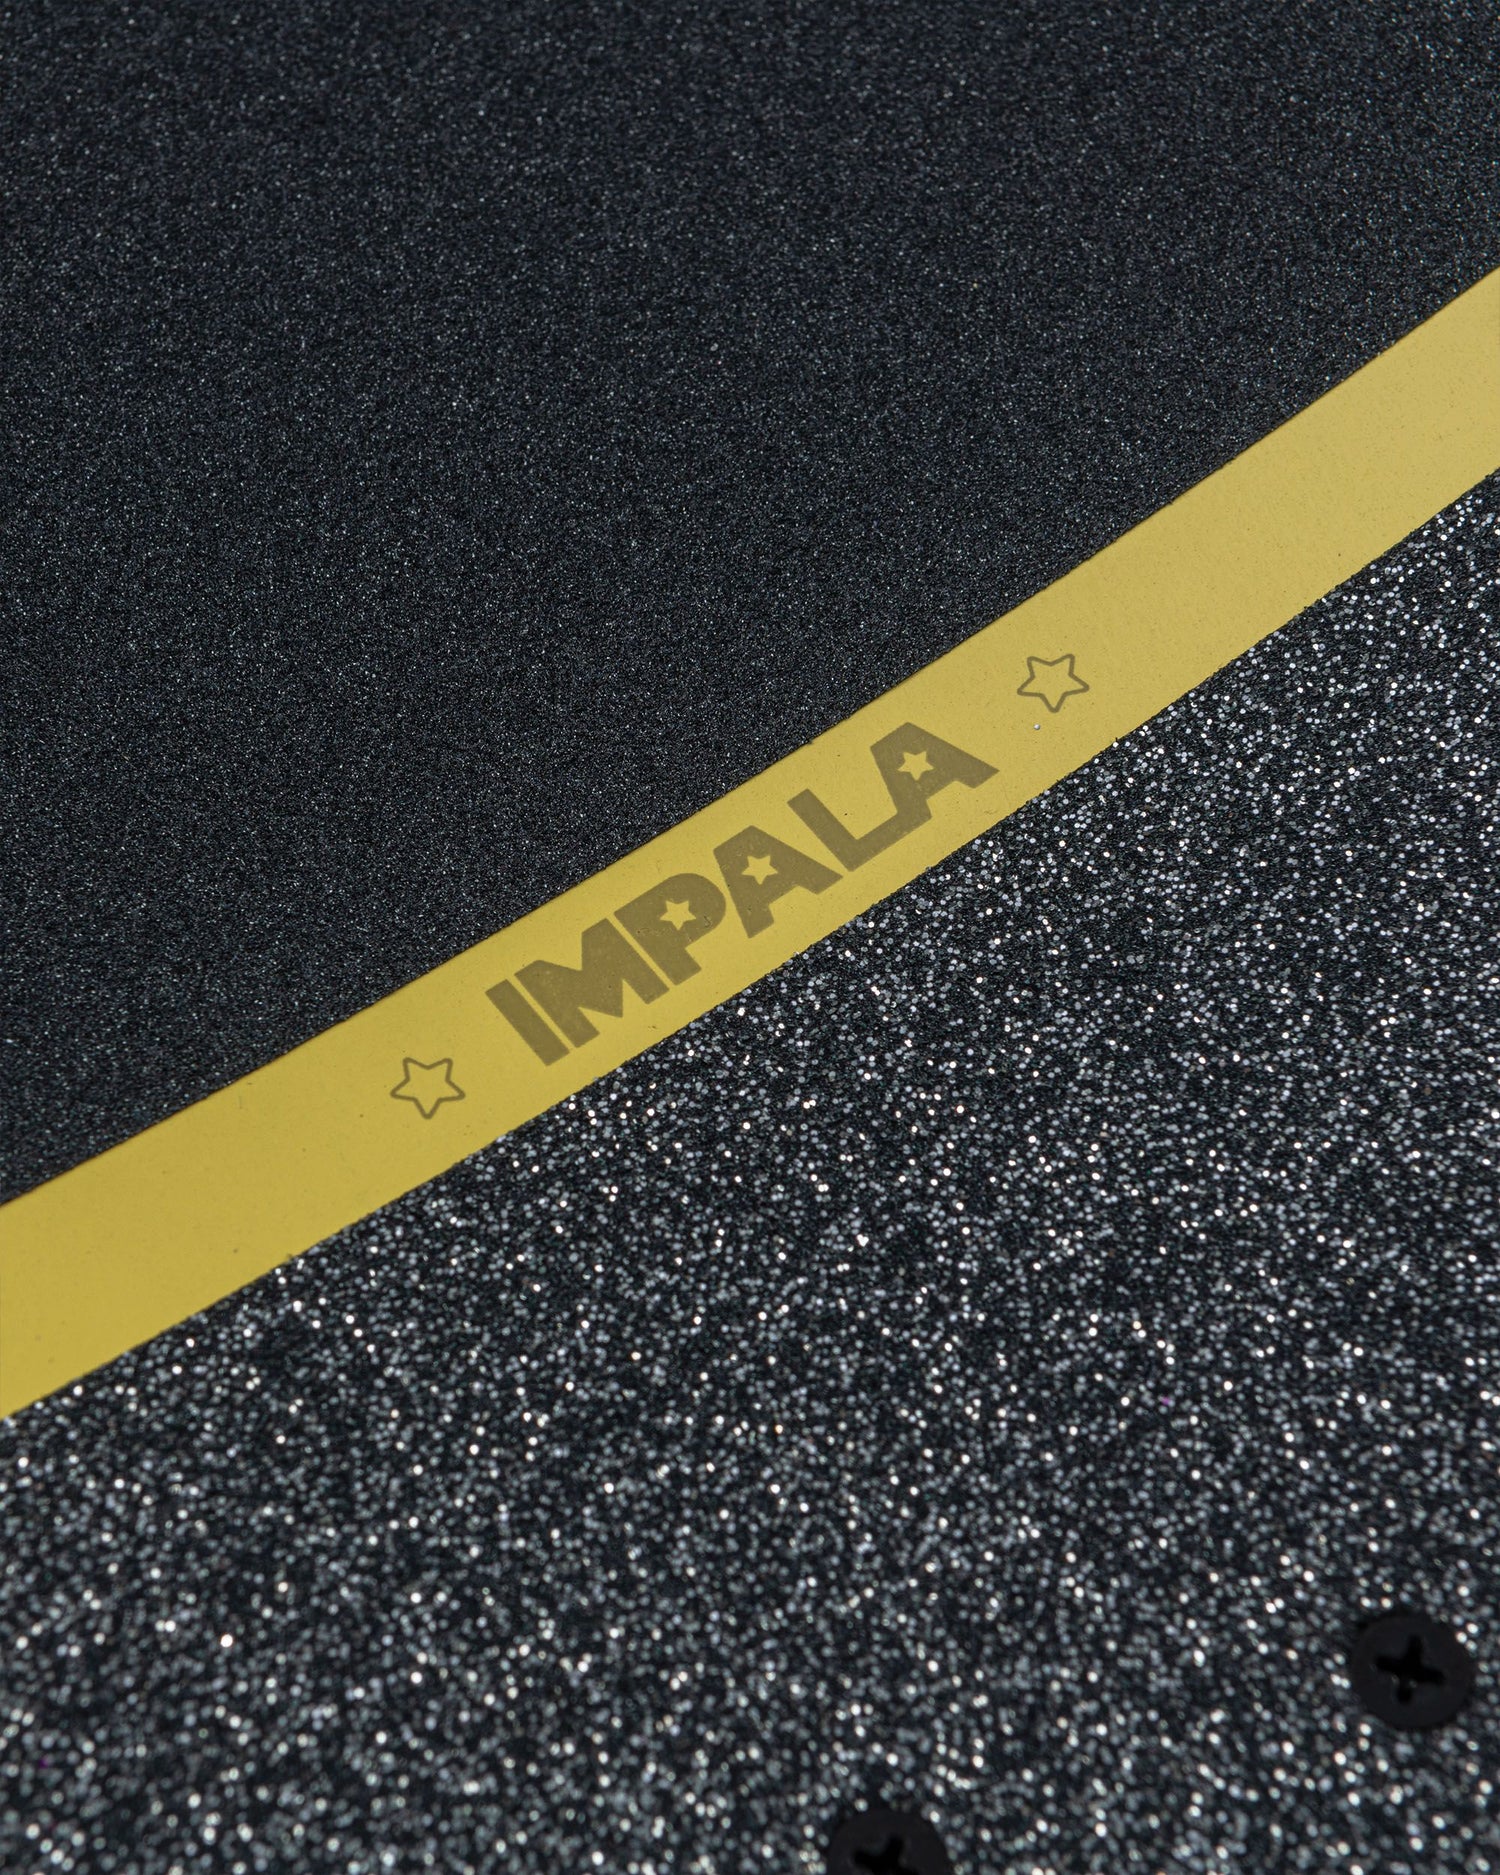 Grip tape detailing of Impala Cosmos Skateboard - Yellow